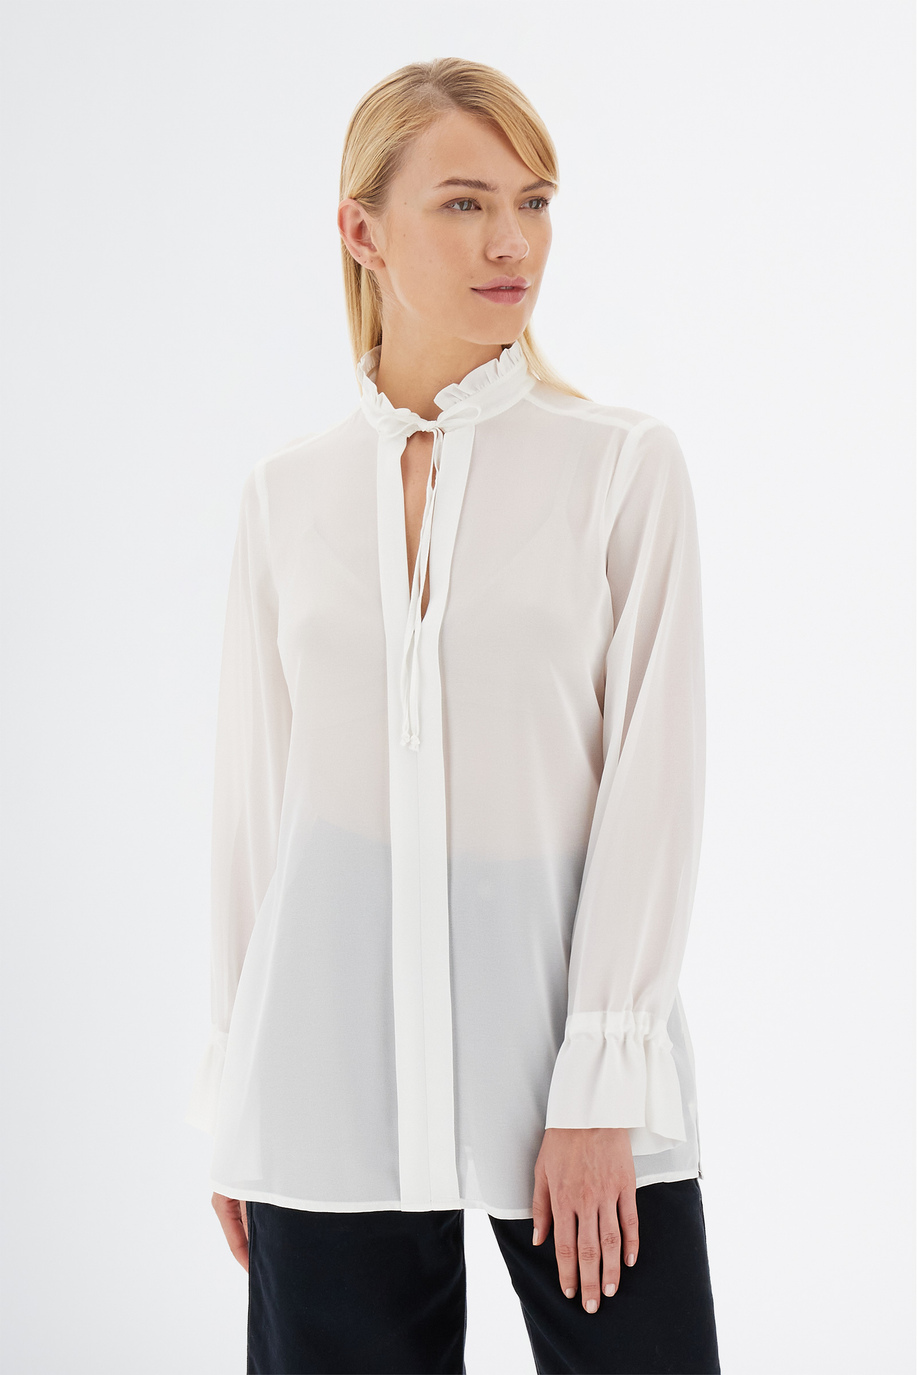 Women’s shirt Argentina fabric georgette regular fit long sleeves - Women | La Martina - Official Online Shop